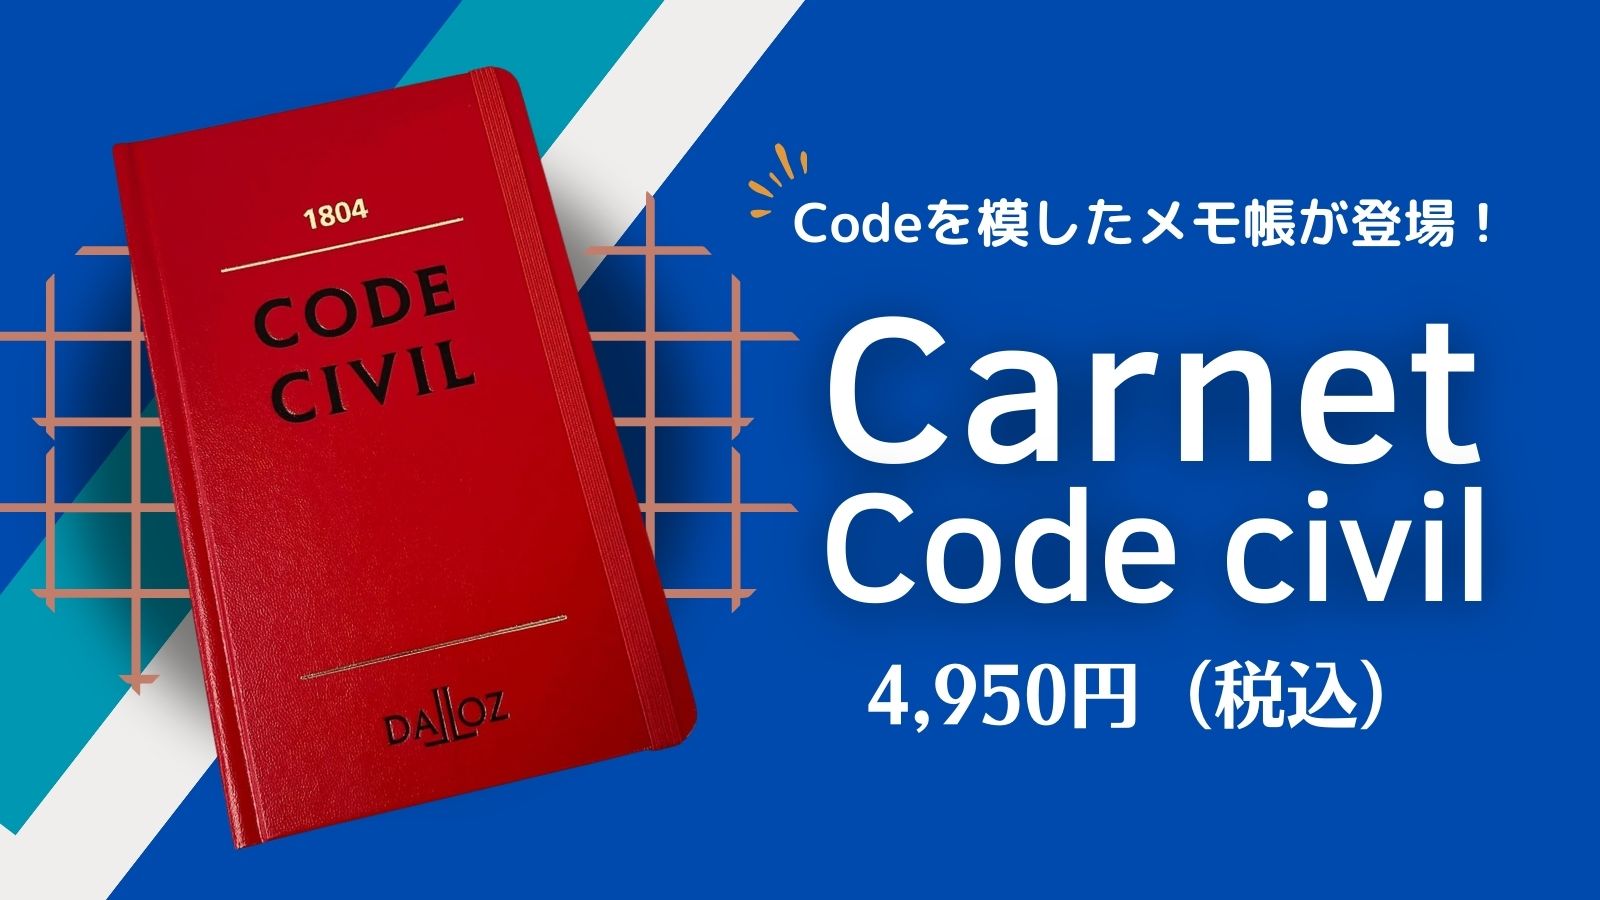 Carnet Code civil 1804